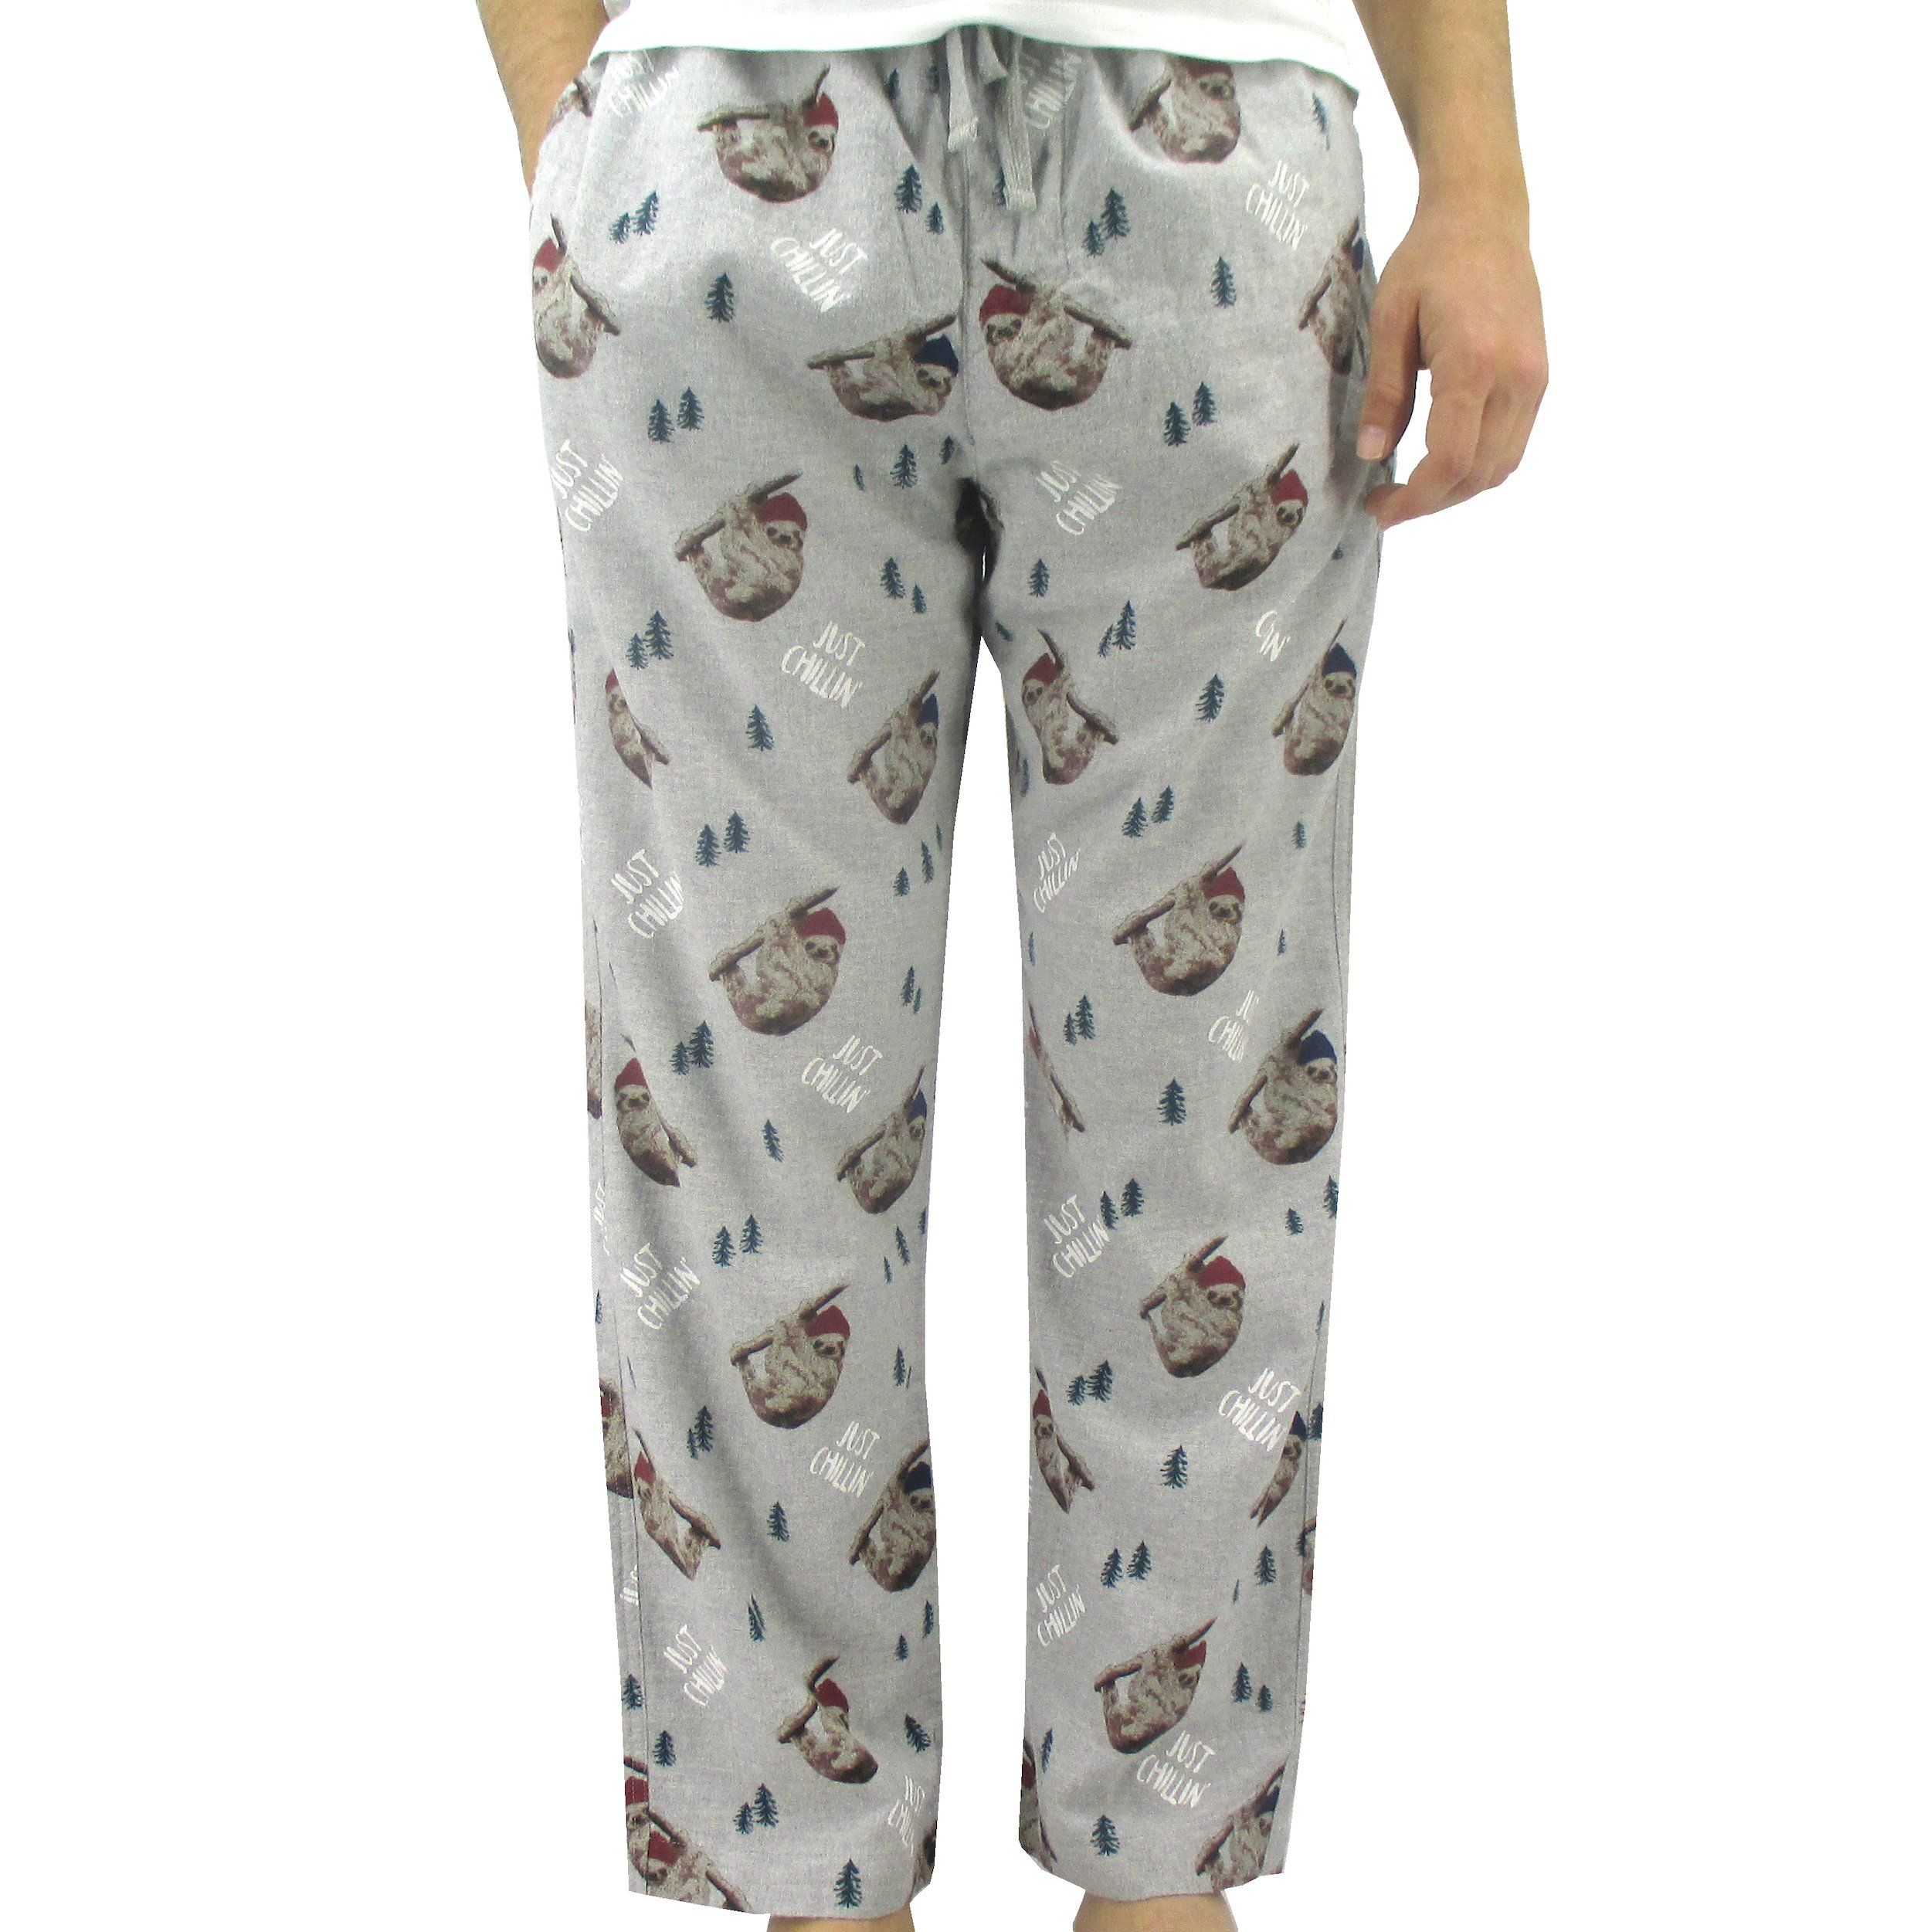 Super Soft Sloth Print Just Chillin Pattern Flannel Pajama Bottoms